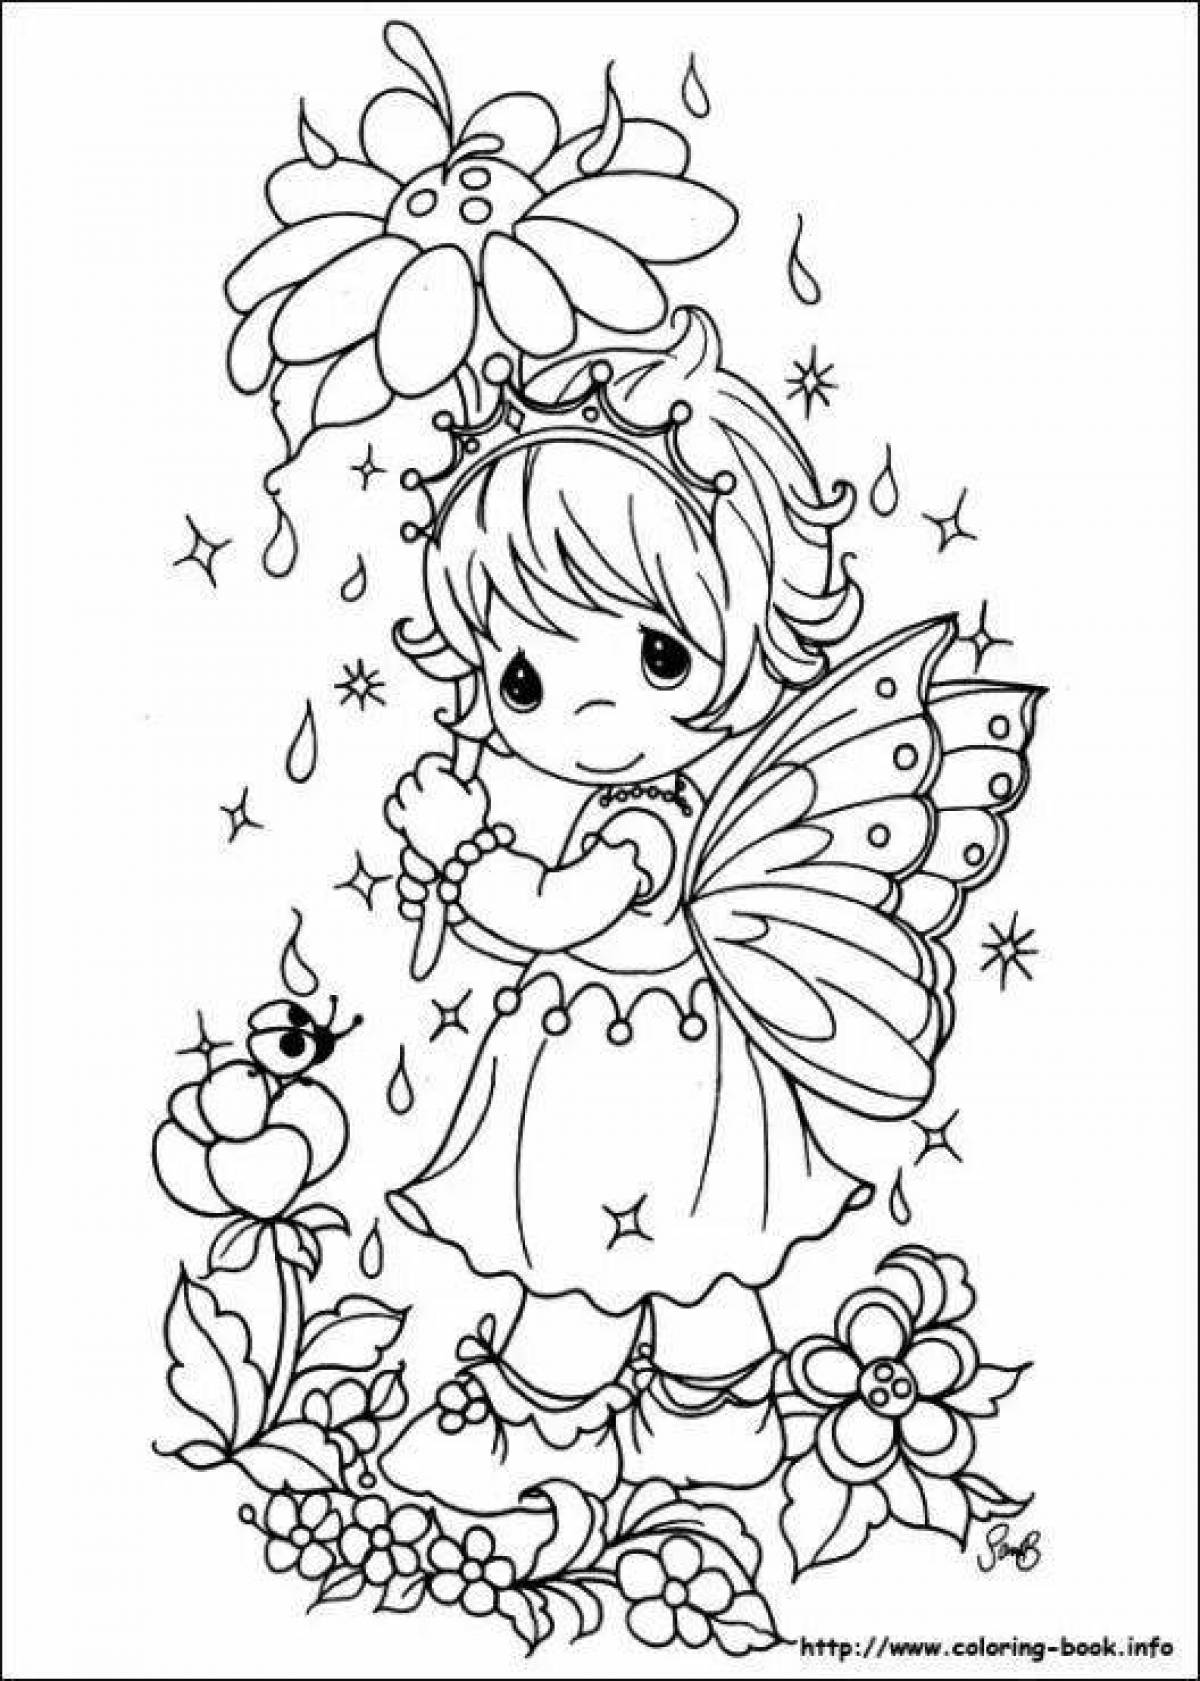 Coloring page joyful little fairy